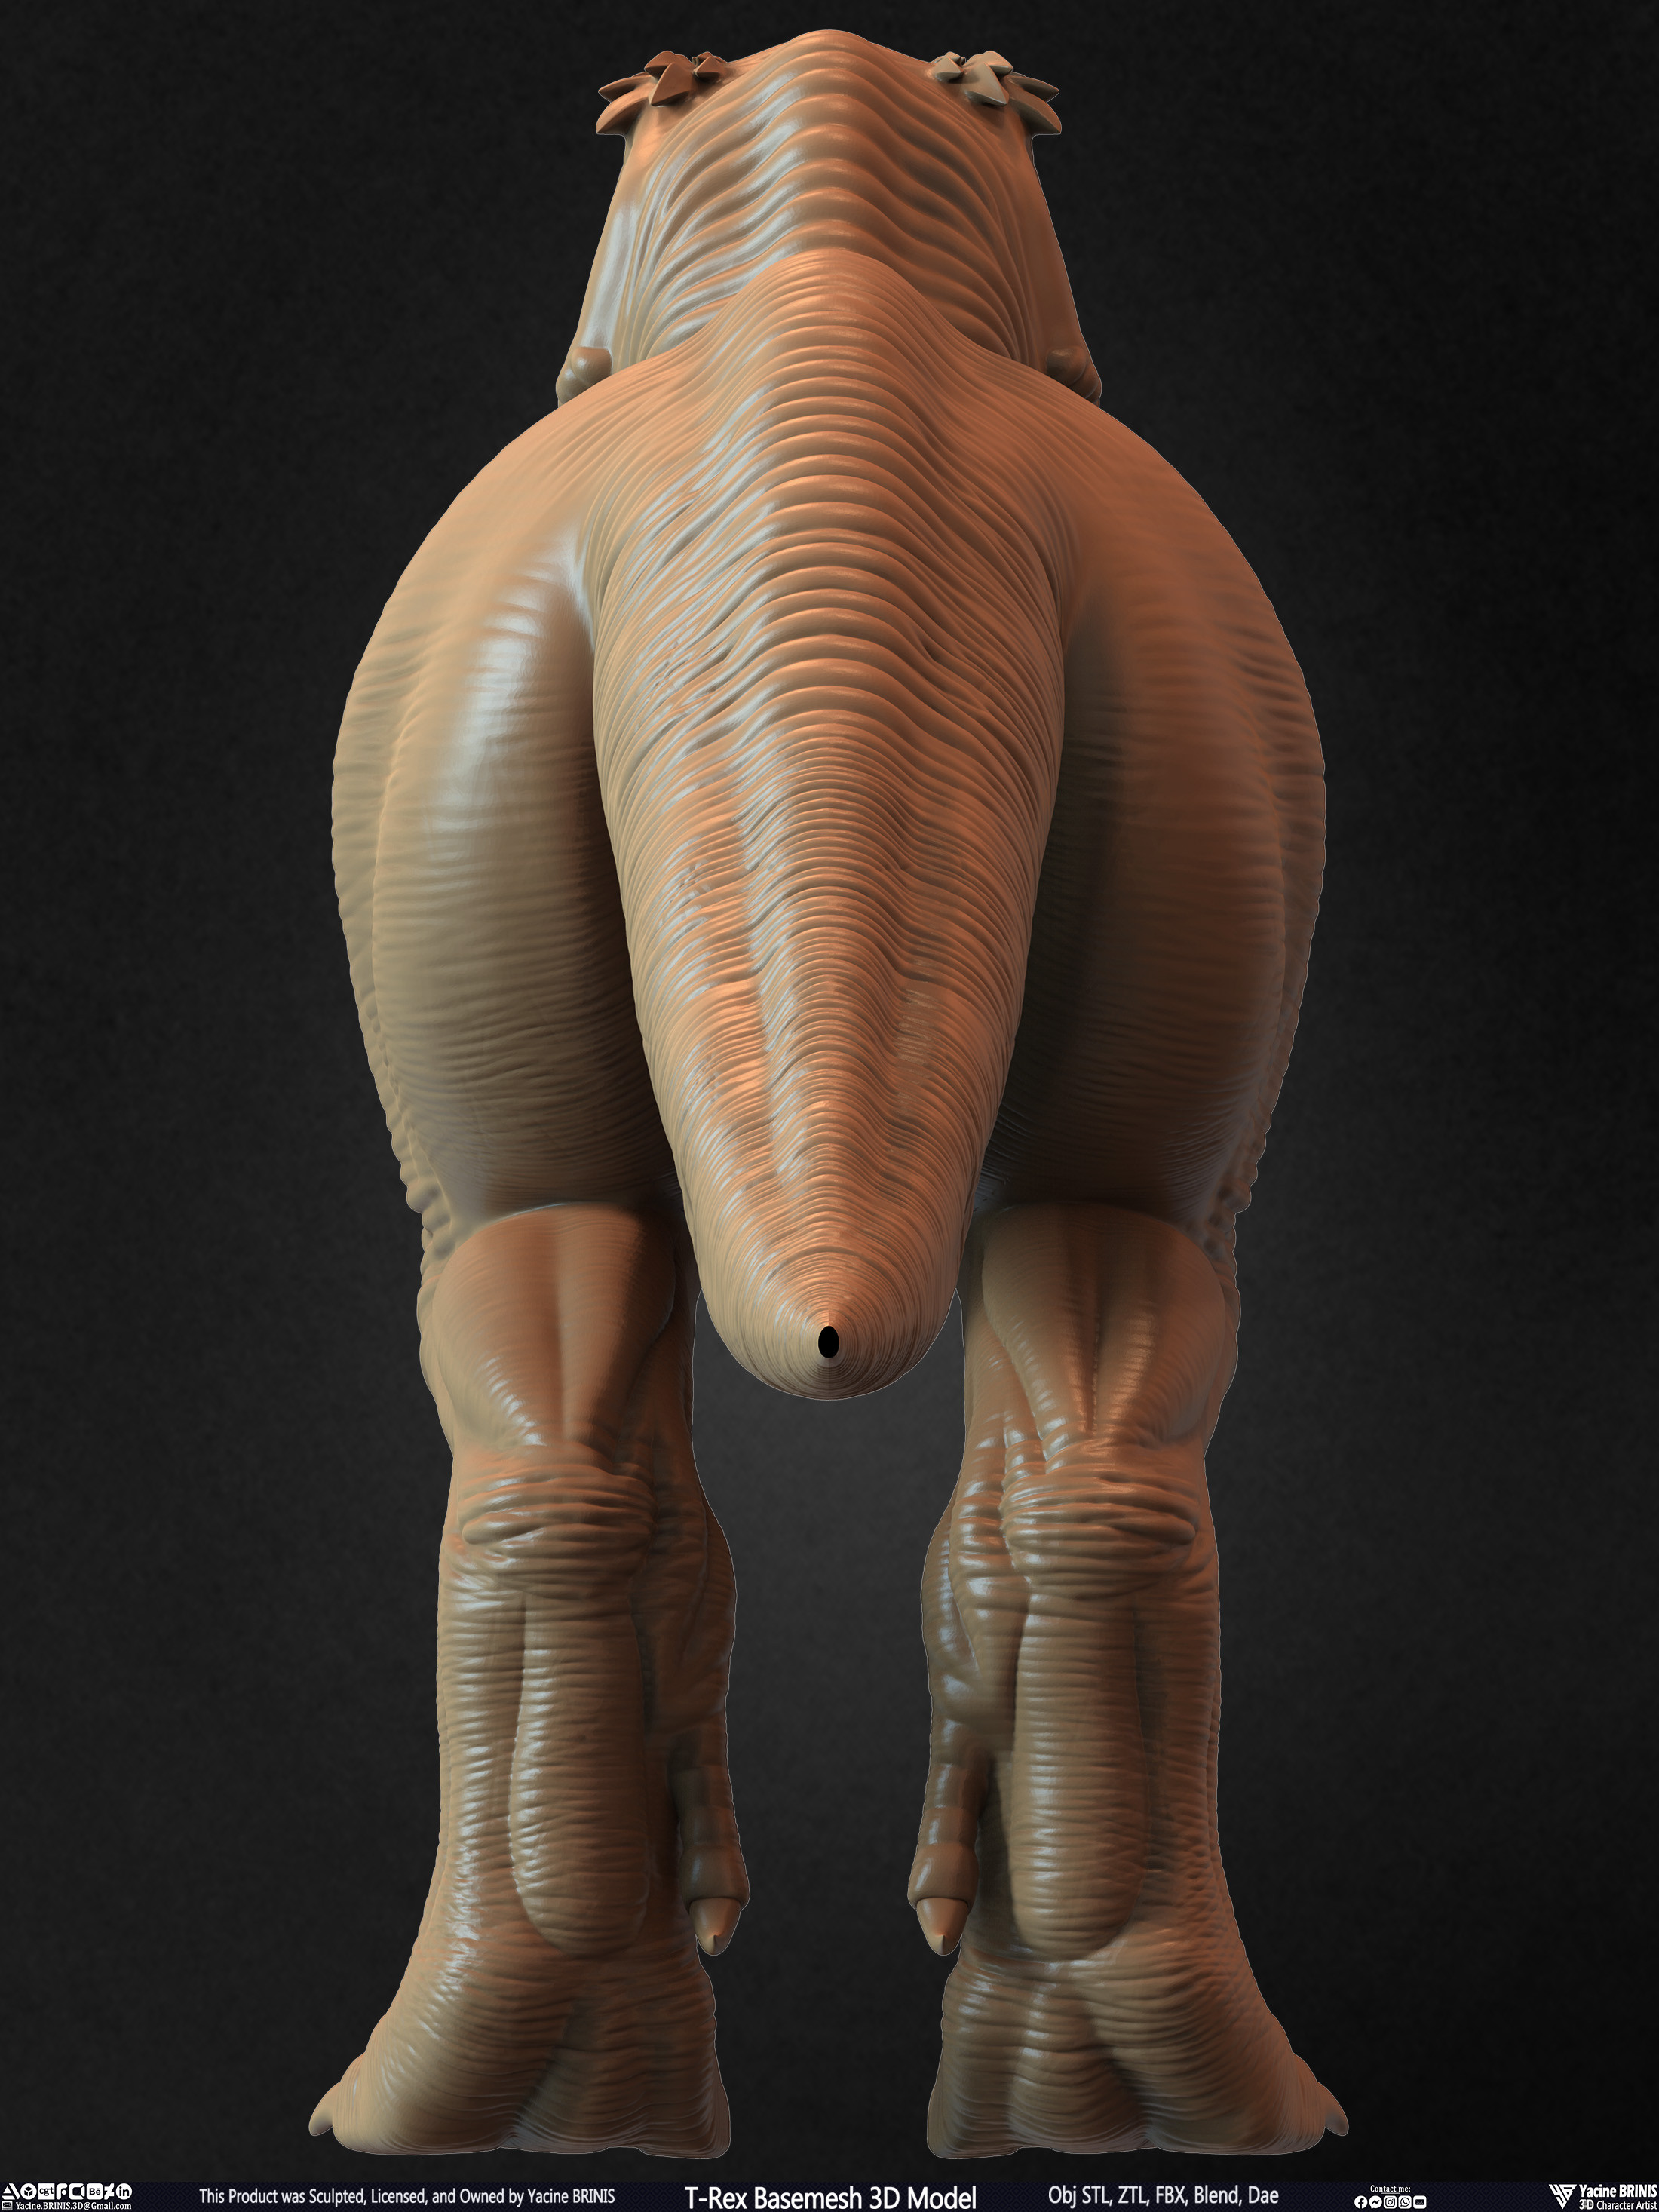 T-Rex Basemesh 3D Model (Tyrannosaurus Rex) Sculpted By Yacine BRINIS Set 007